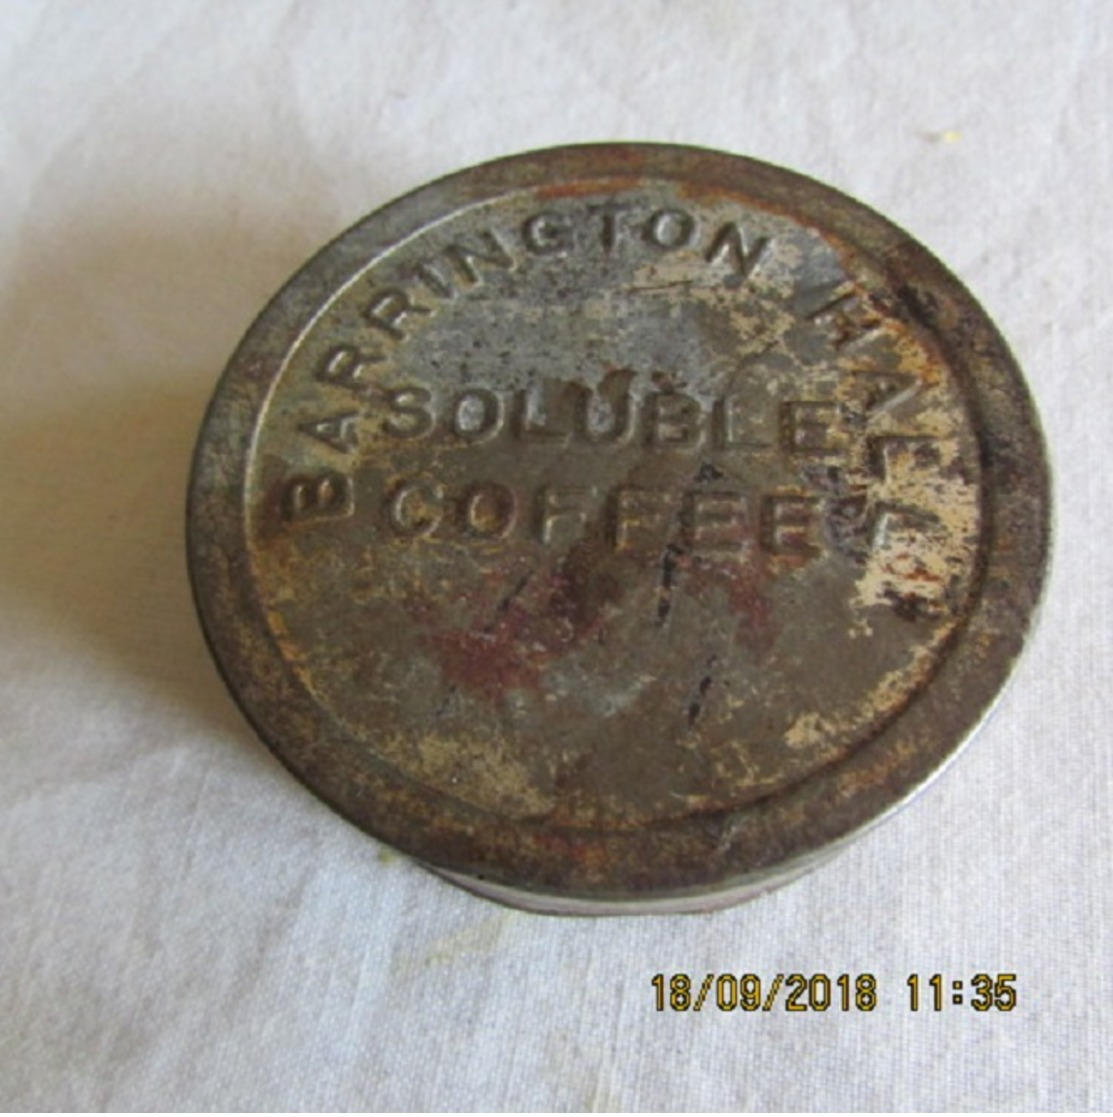 WW1 US Barrington Soluable Coffee Tin - 1914-18